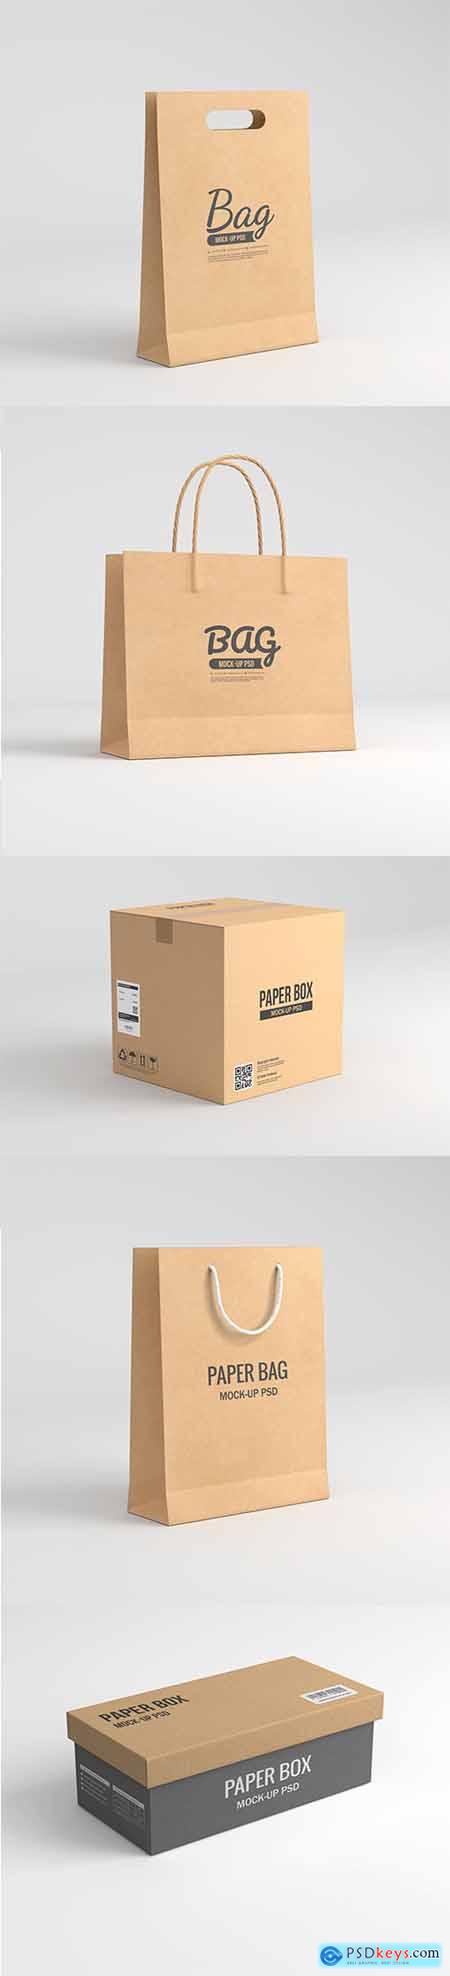 Set of Paper Bag and Box Packaging PSD Mockup